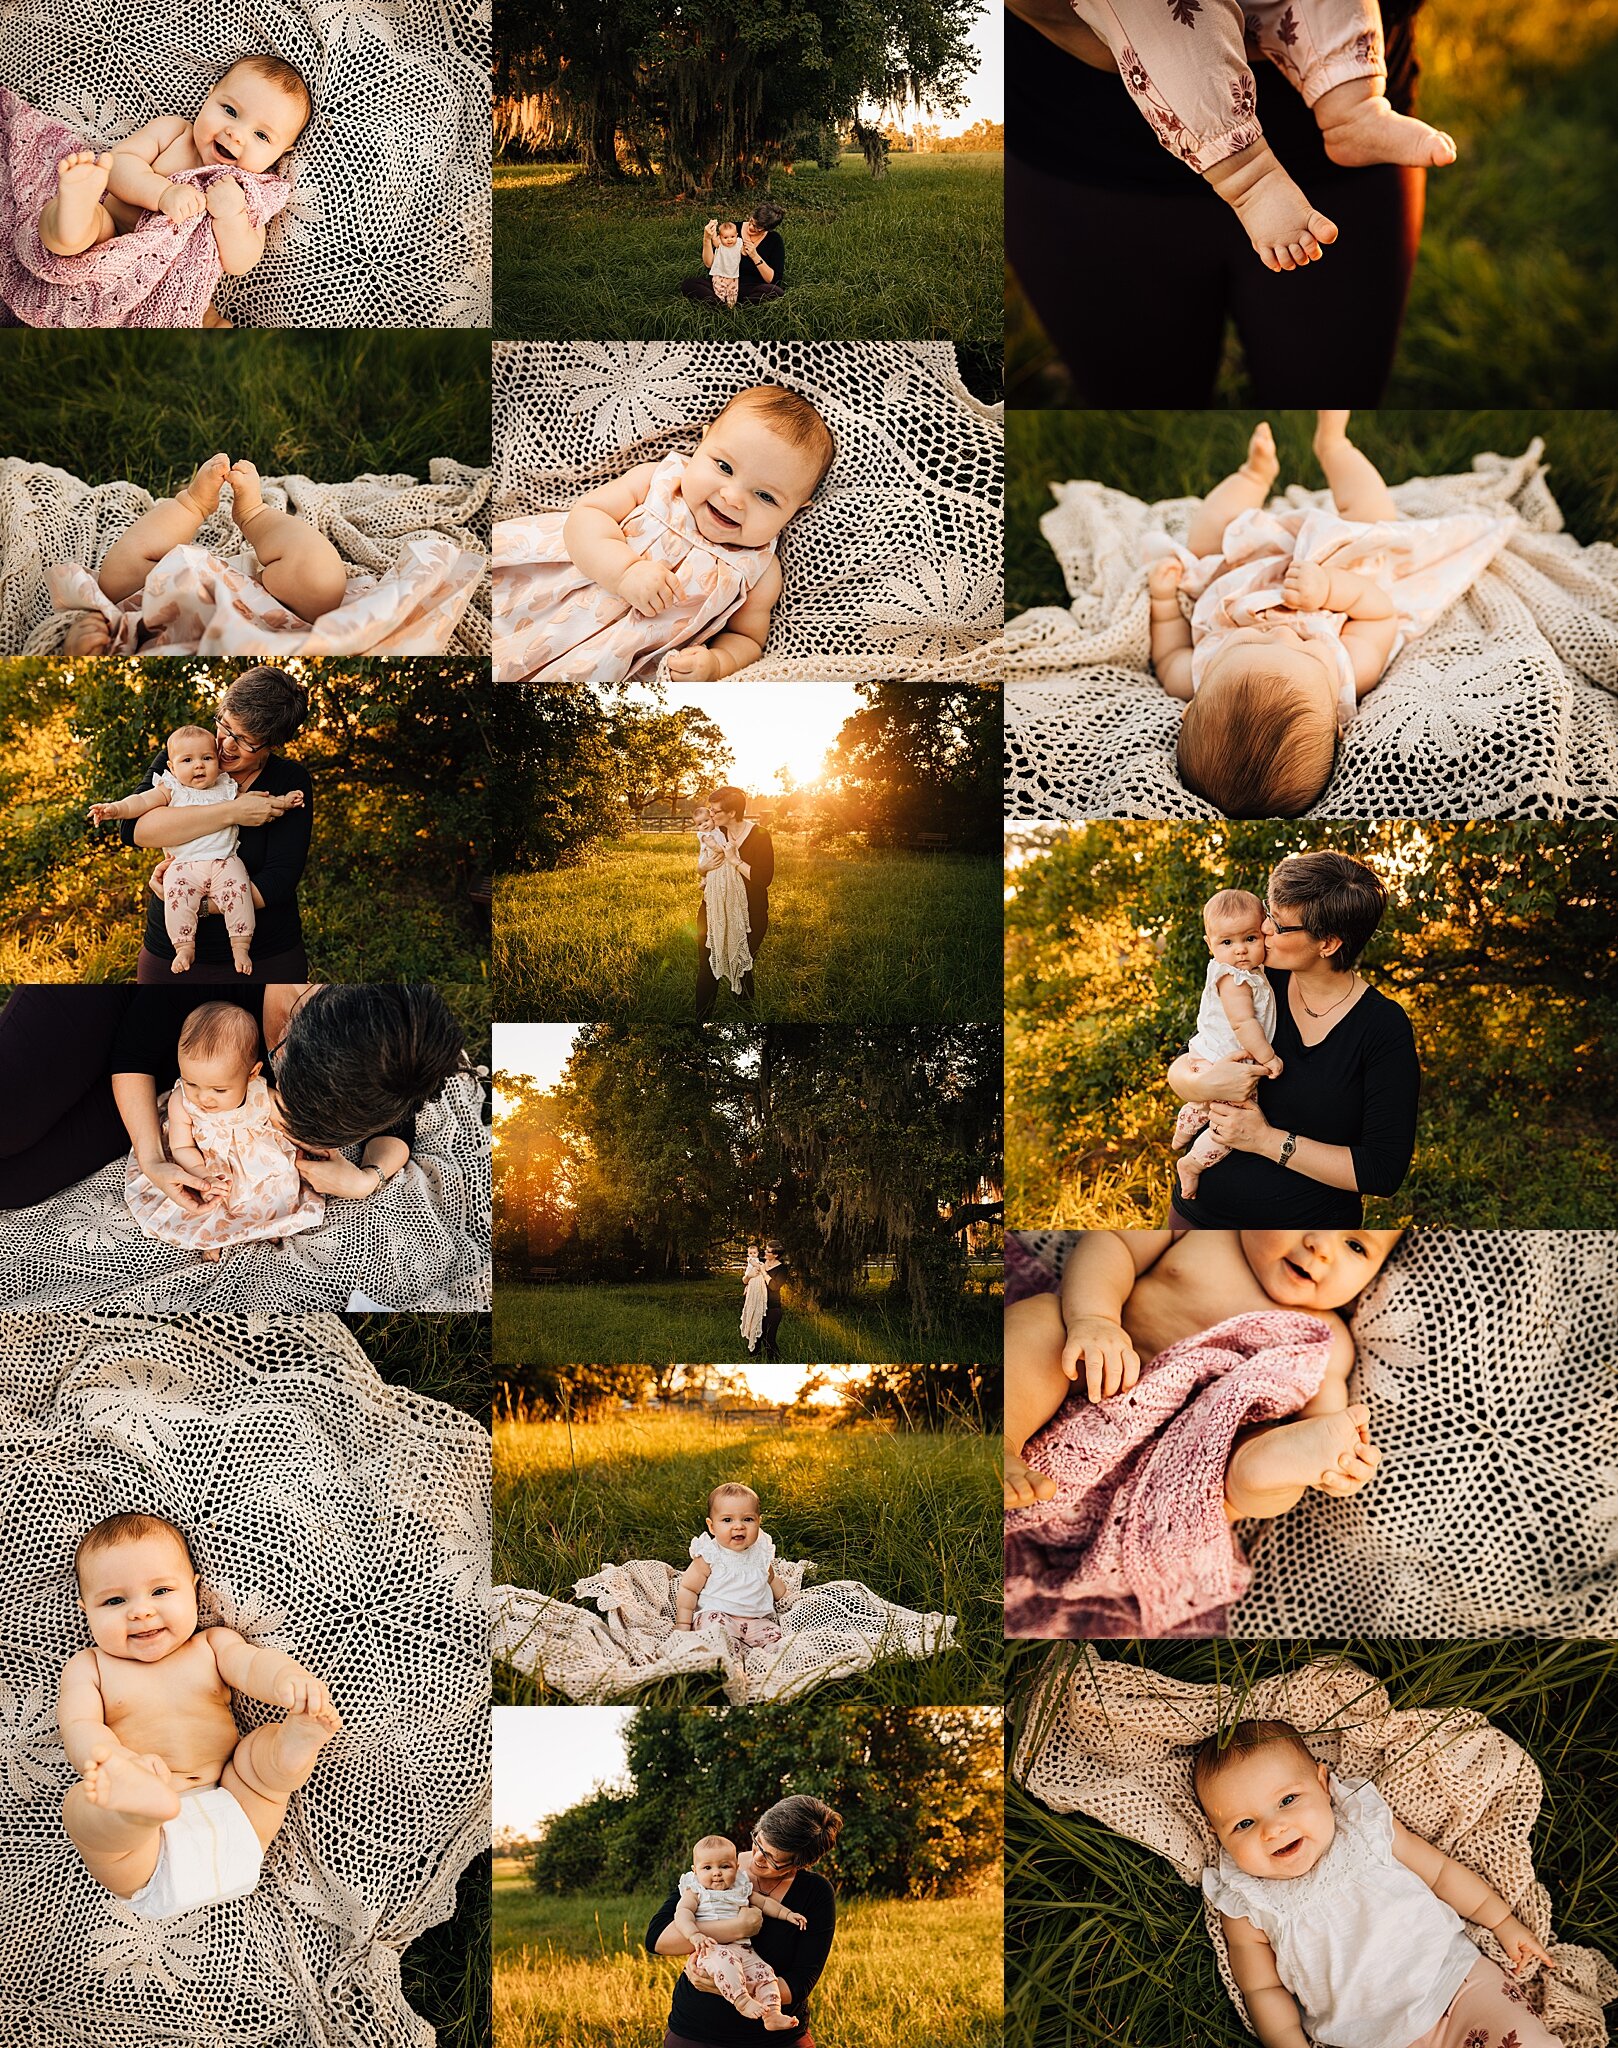 woodlands+baby+photographer